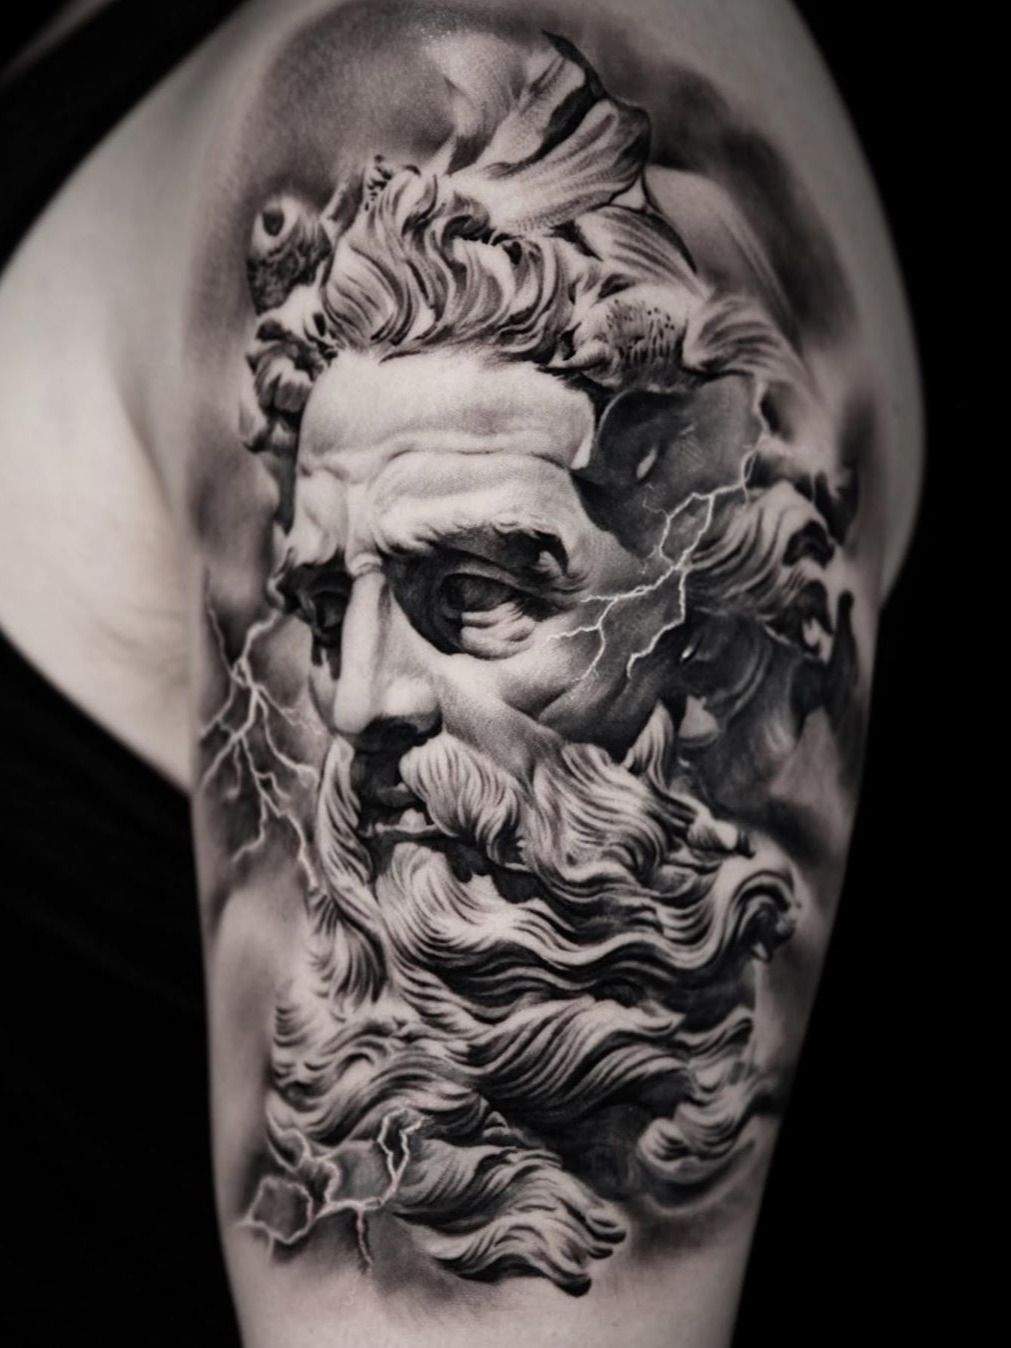 Amazing God Tattoo On Arms - Tattoos Designs